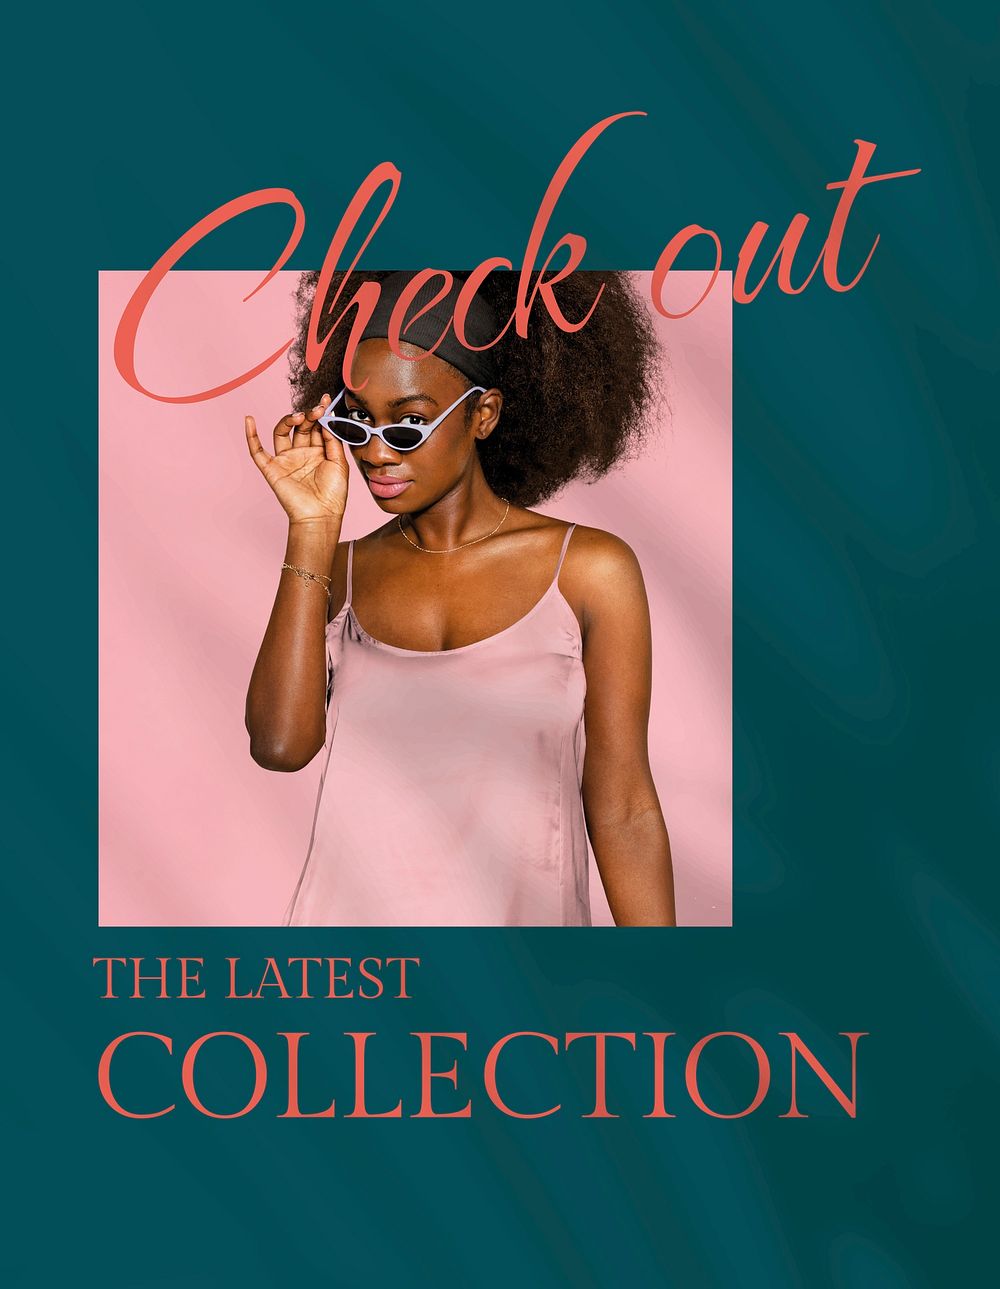 Fashion collection flyer template, editable text vector